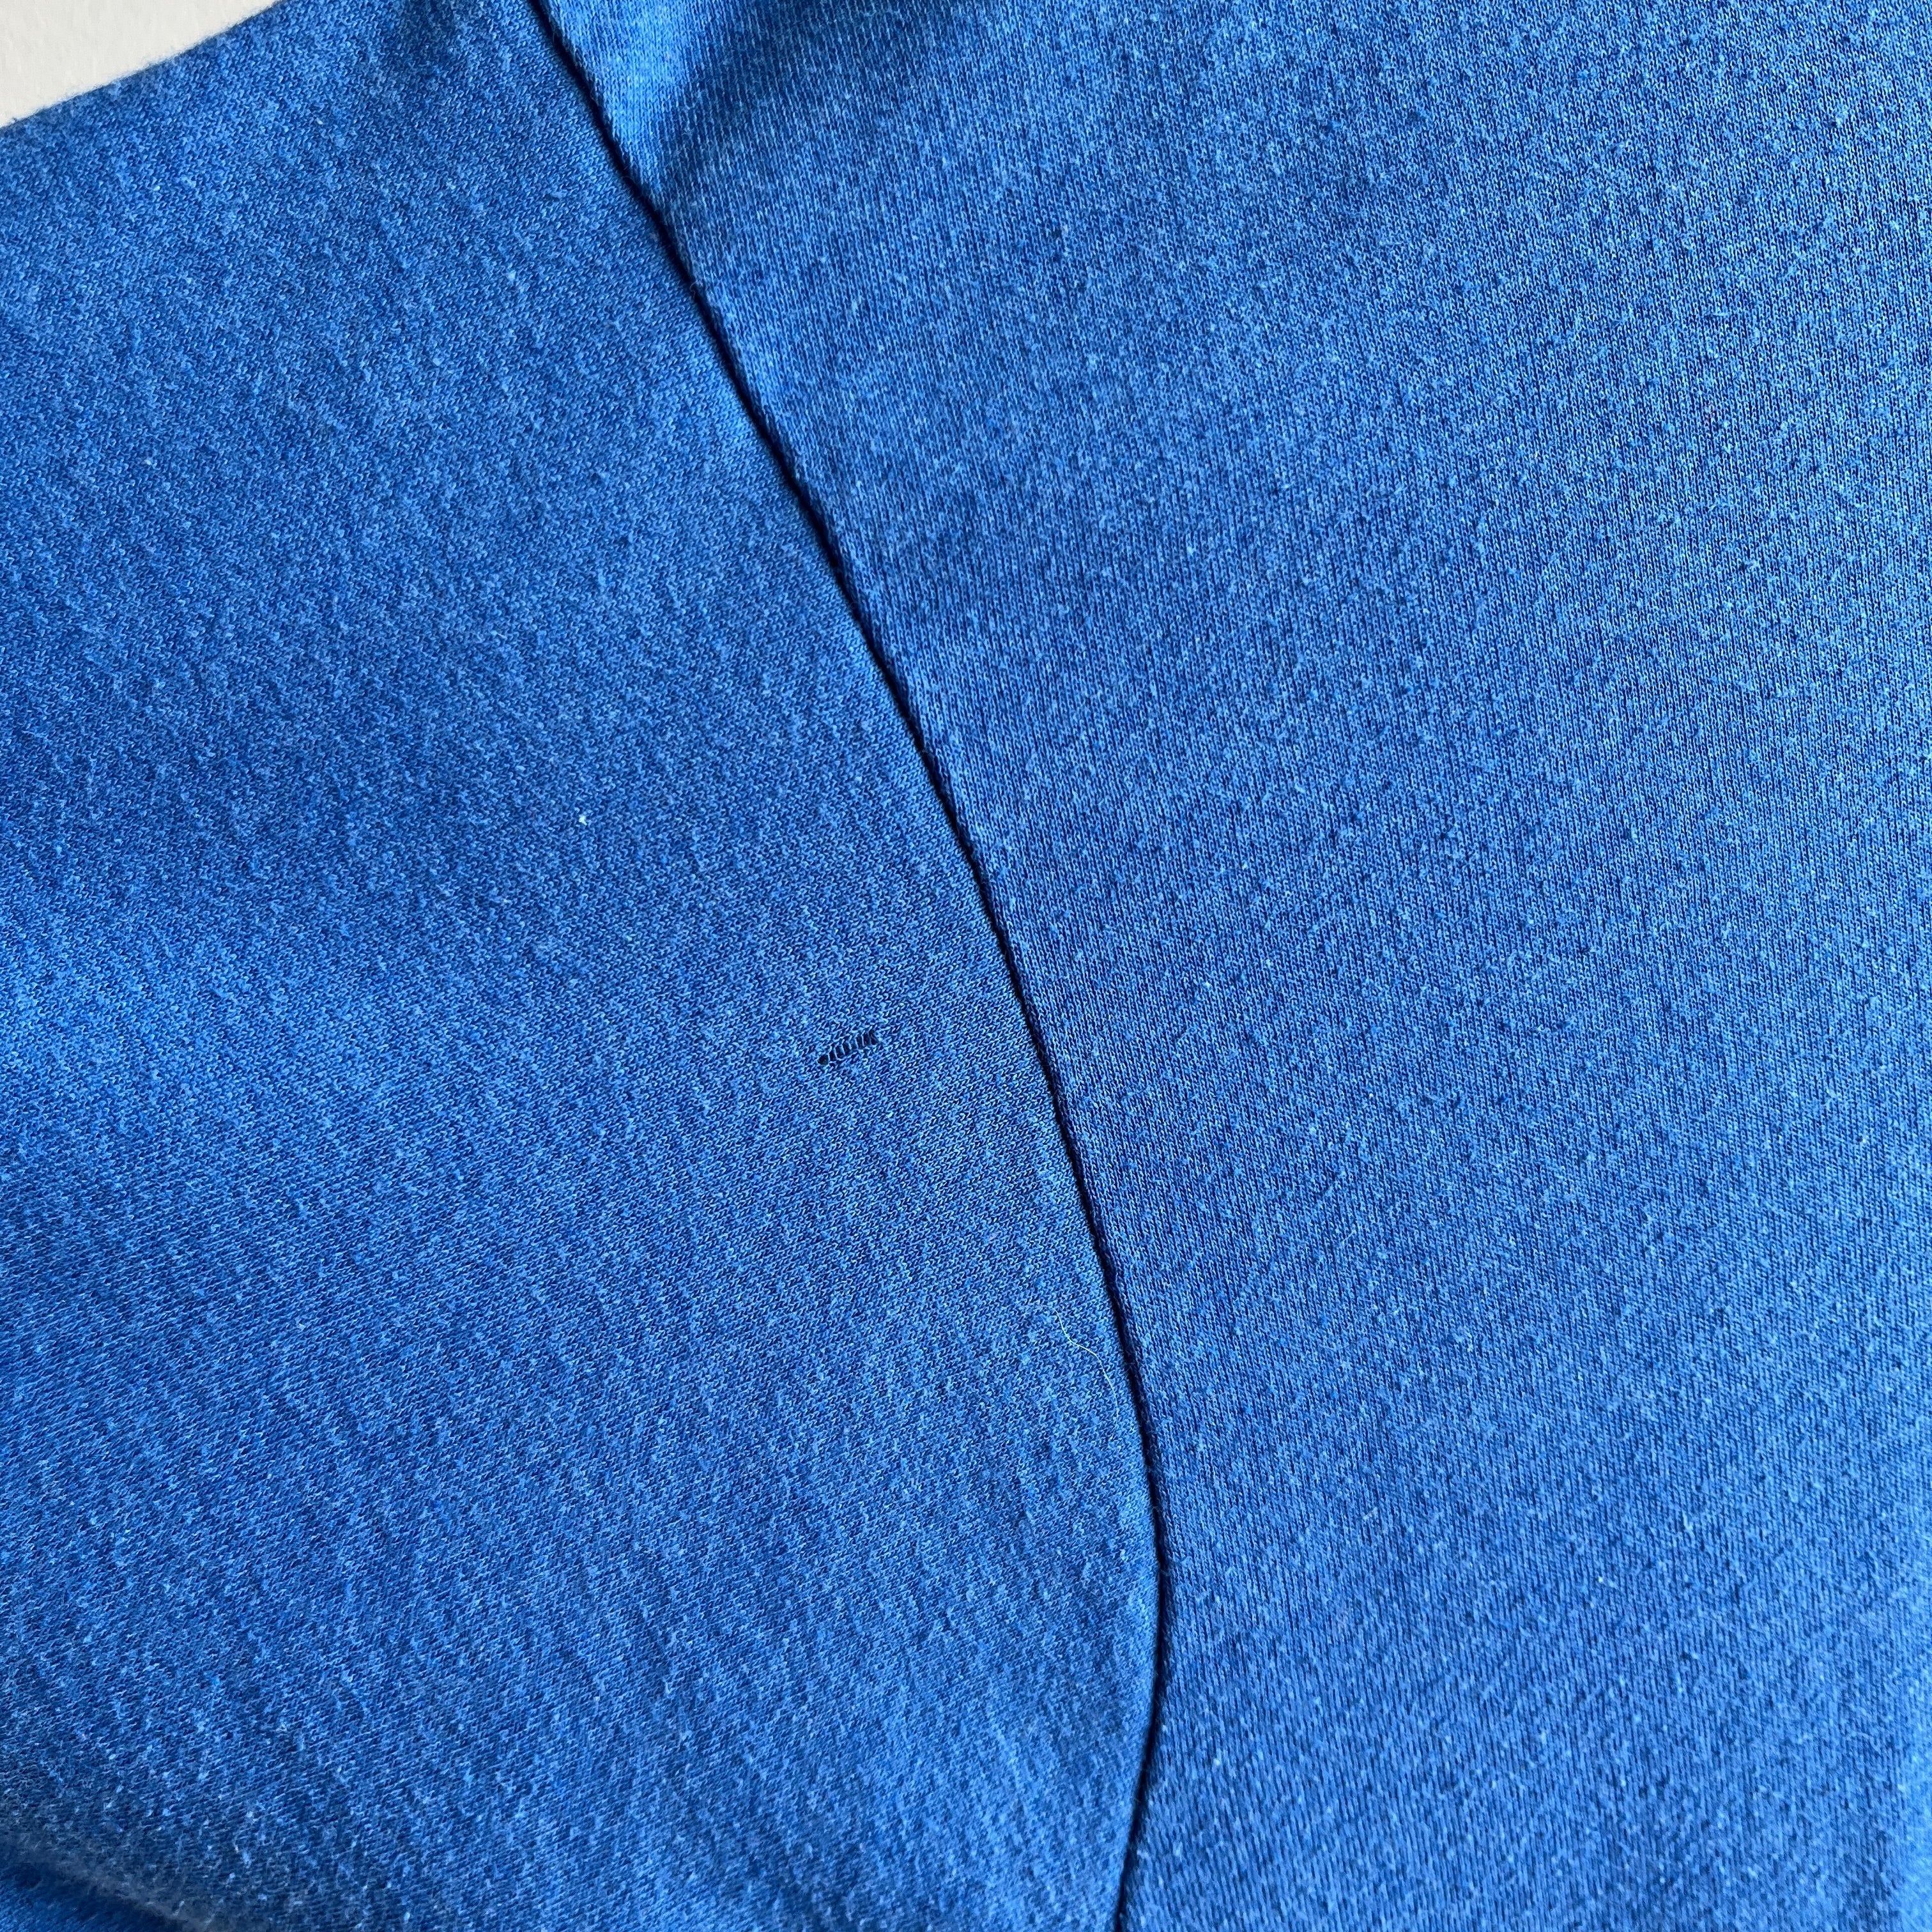 1980s FOTL Dodger Blue Selvedge Pocket T-Shirt